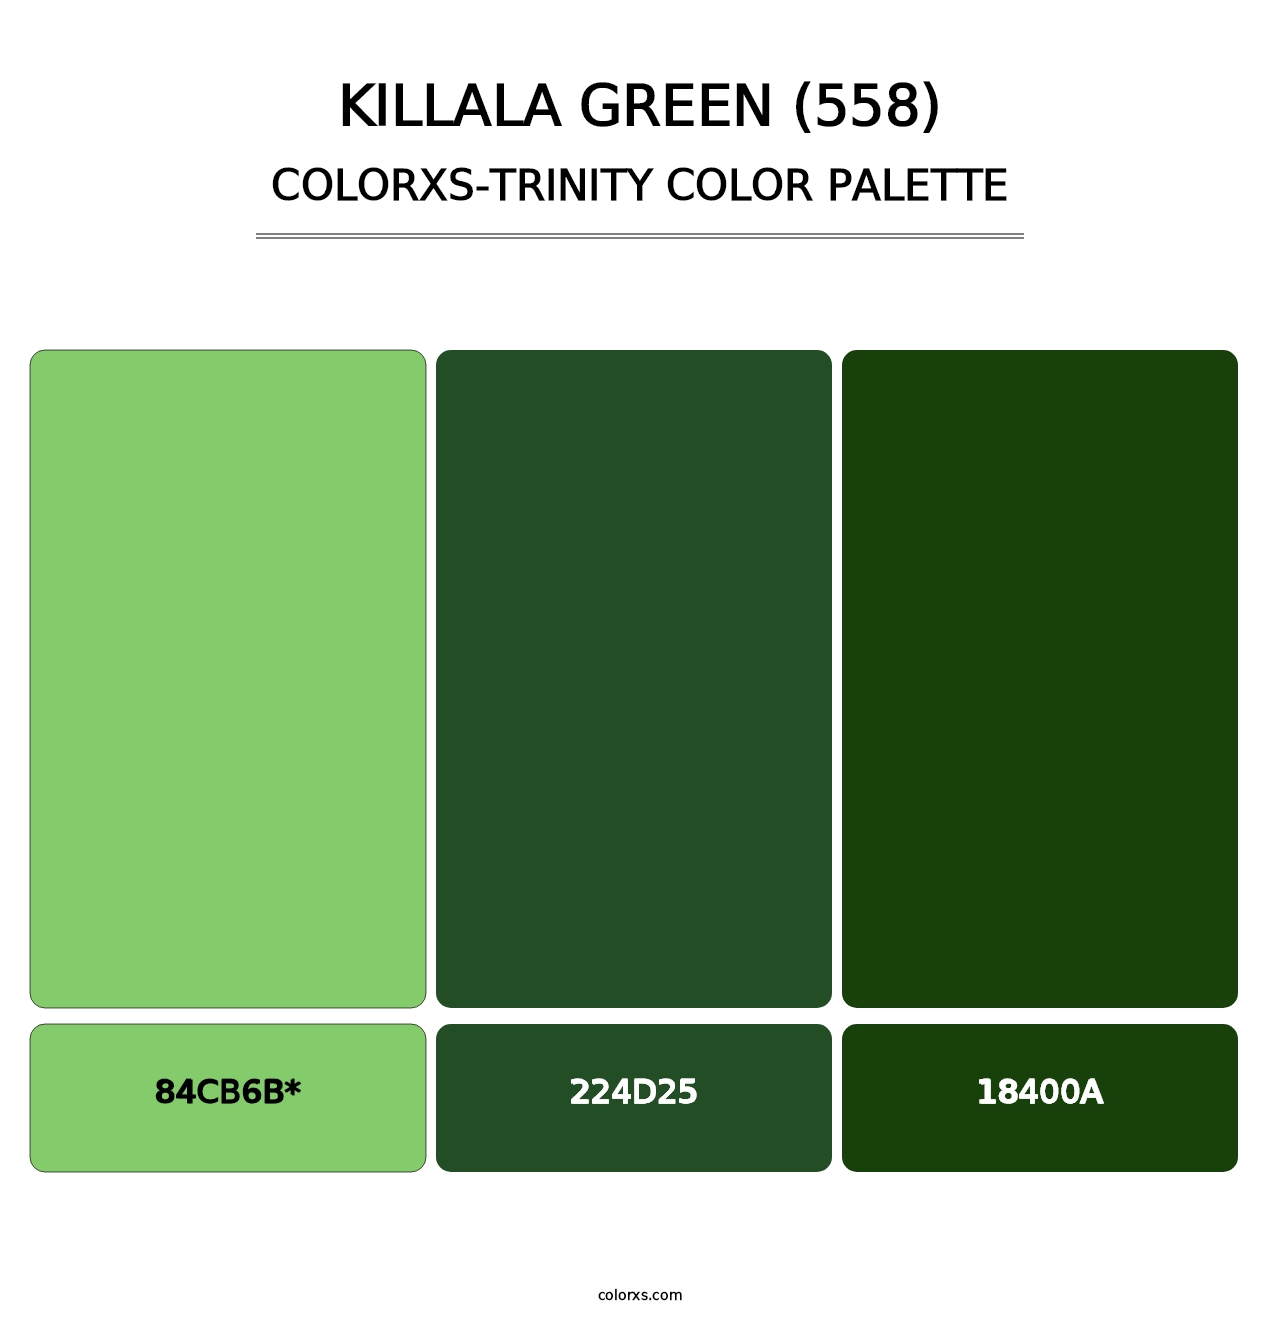 Killala Green (558) - Colorxs Trinity Palette